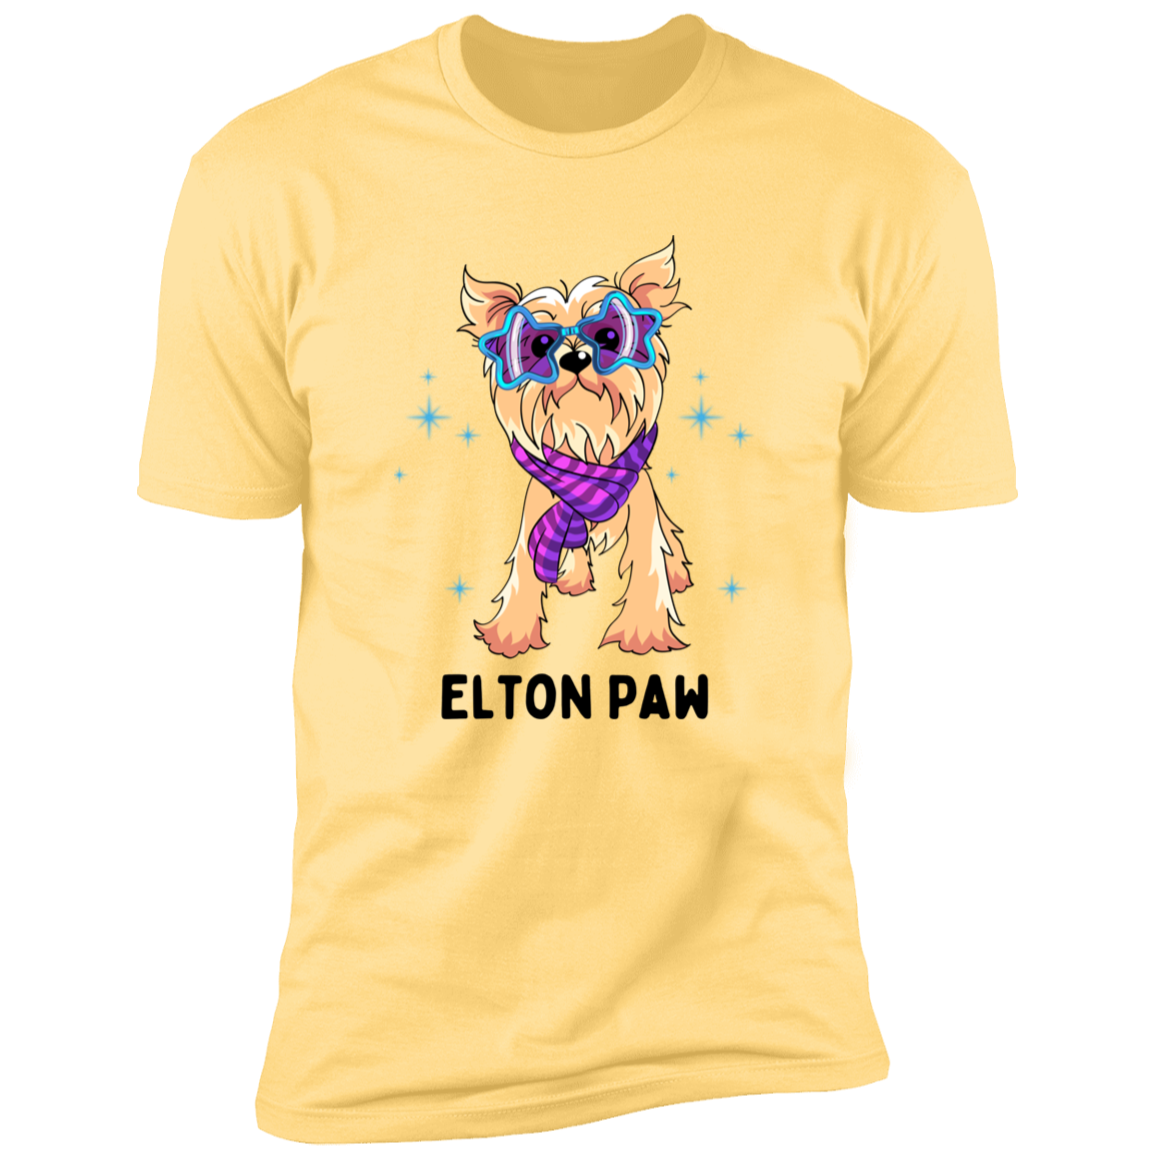 Elton Paw Dog Shirt, Funny dog shirt for humans, Dog mom shirt, dog dad shirt, in banana cream